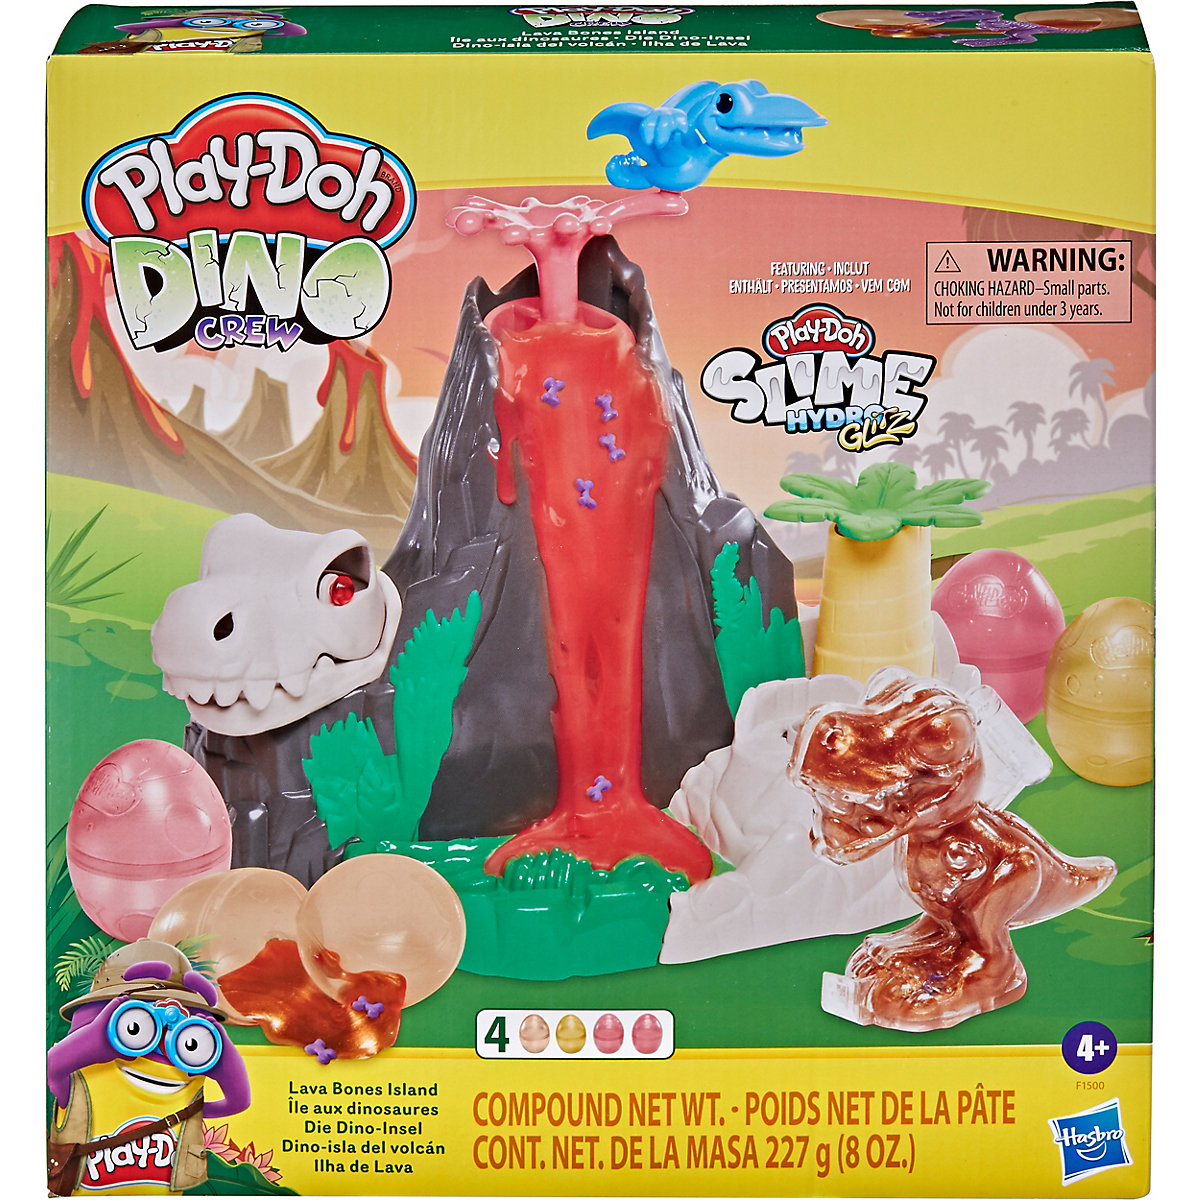 Bild vom Hasbro F1500RC0 Play-Doh Dino-Crew Die Dino-Insel